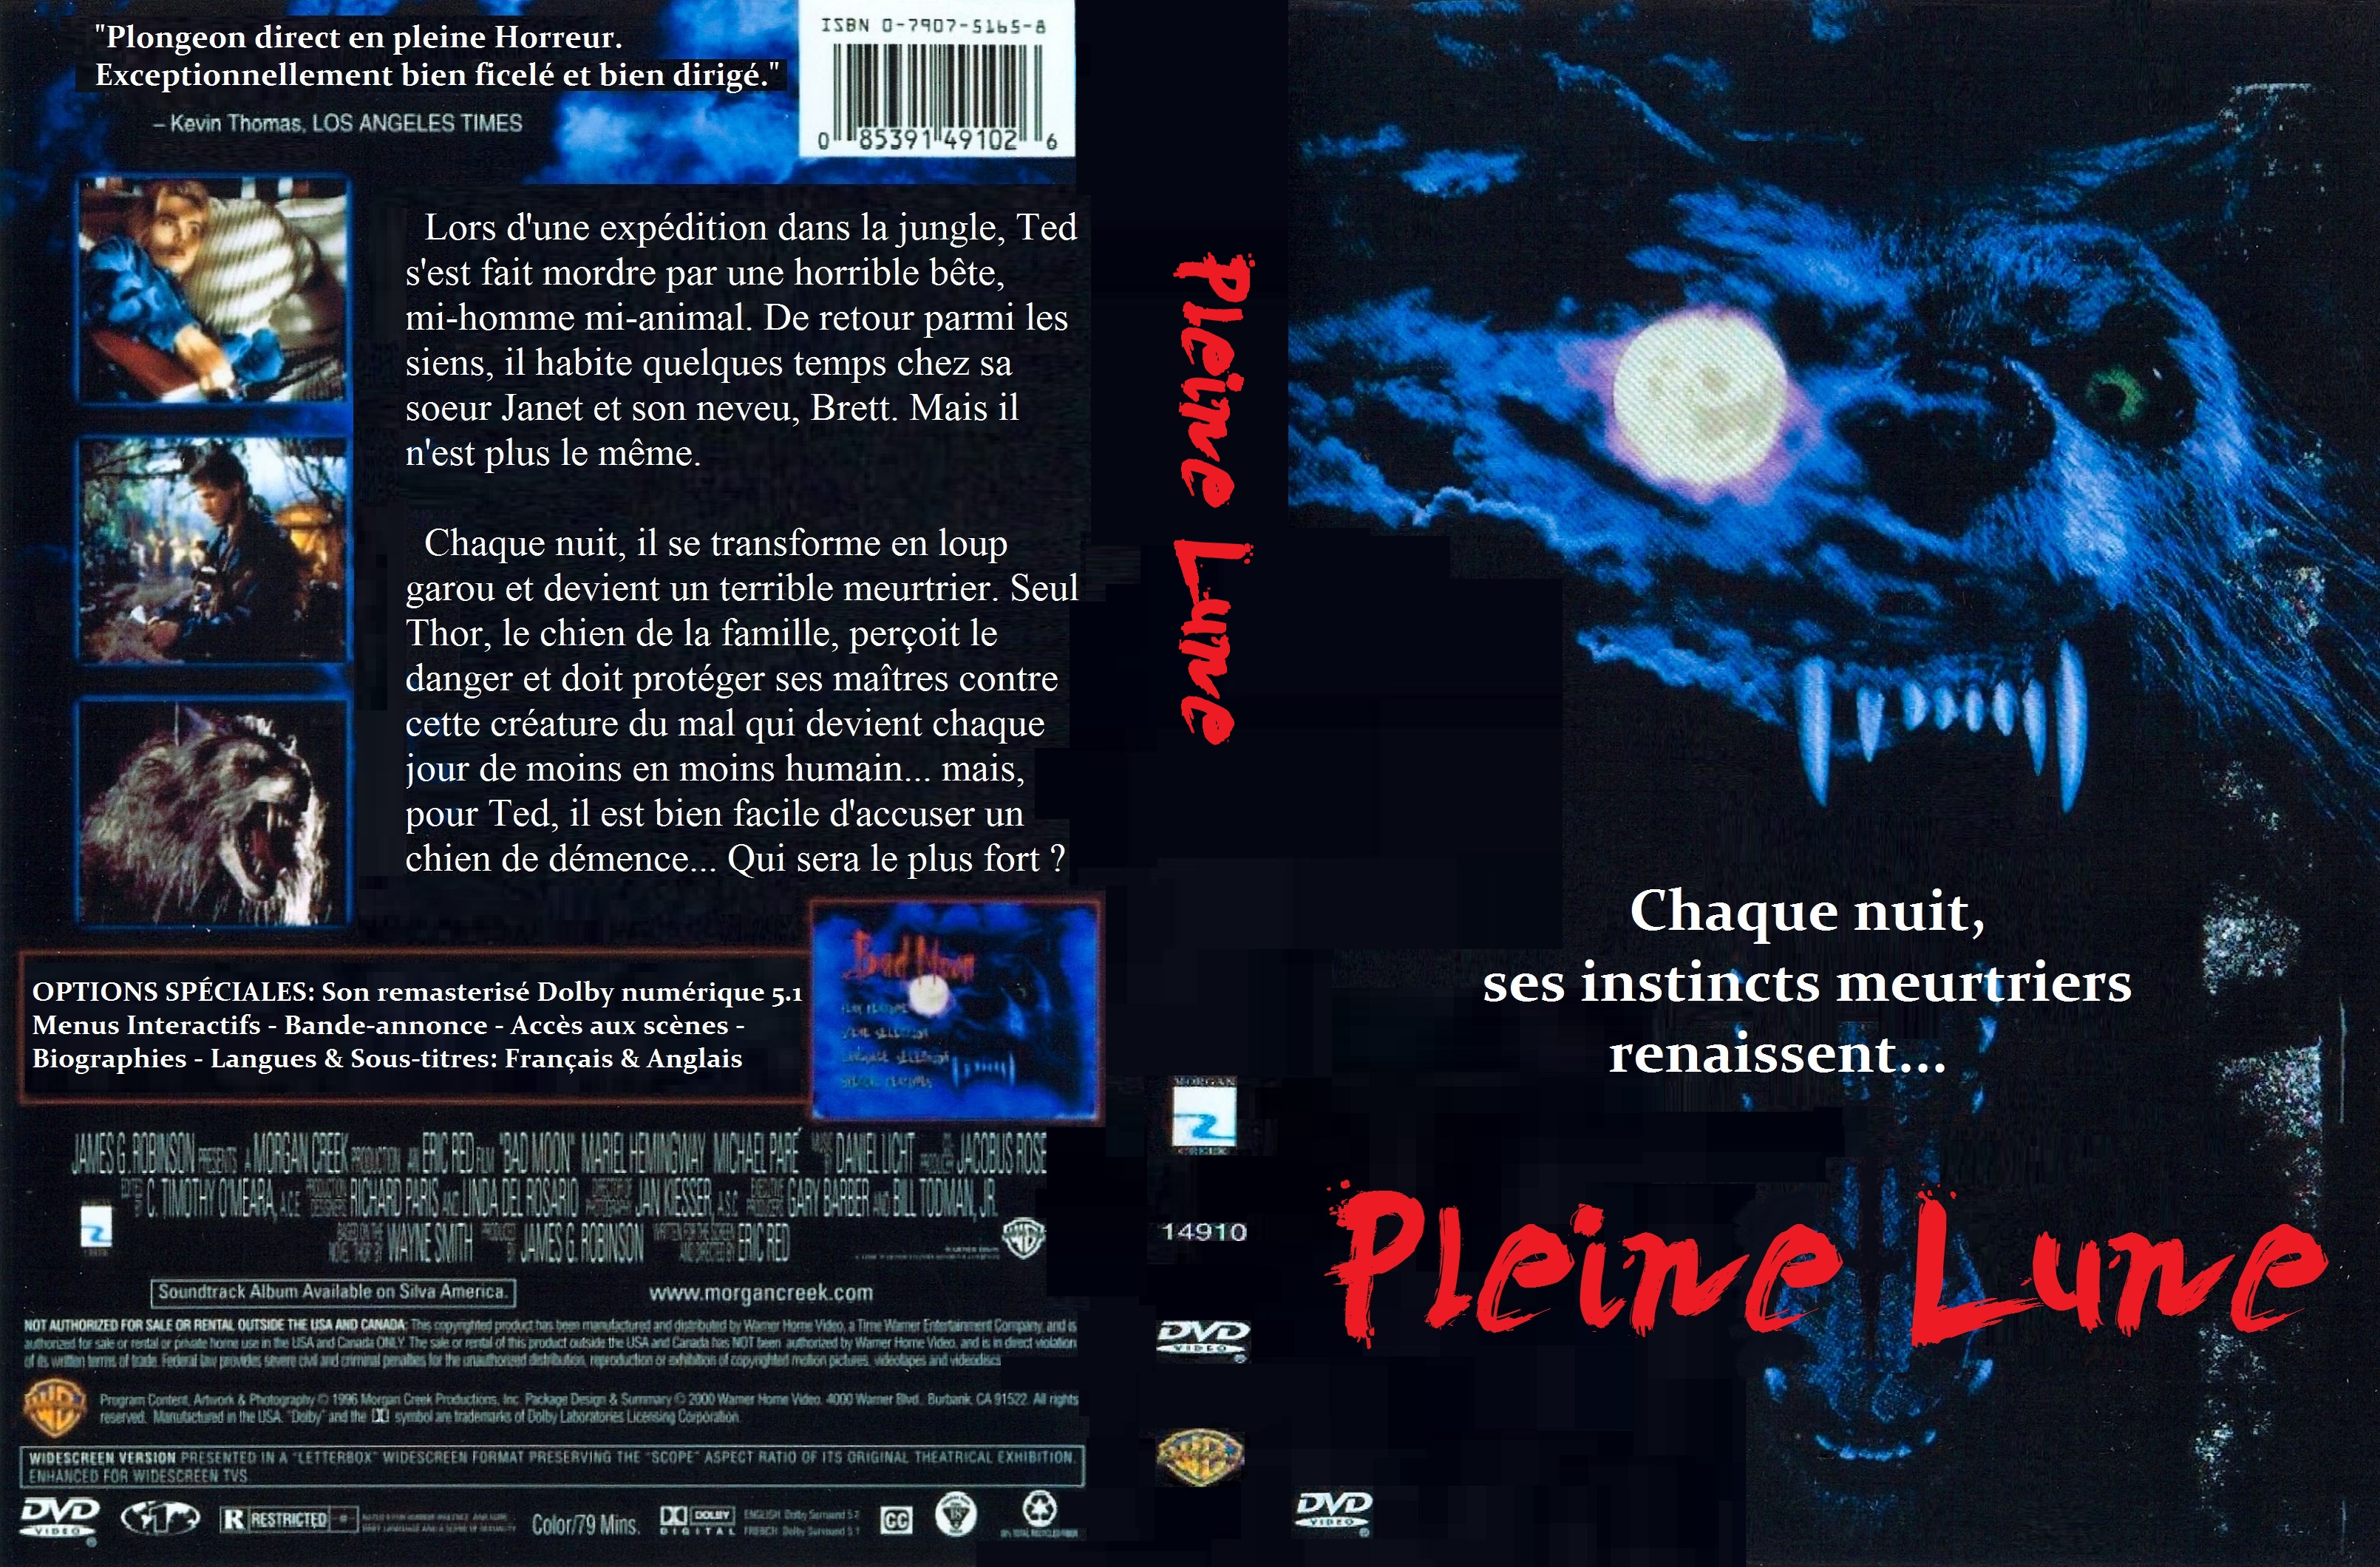 Jaquette DVD Pleine Lune (Bad Moon) custom